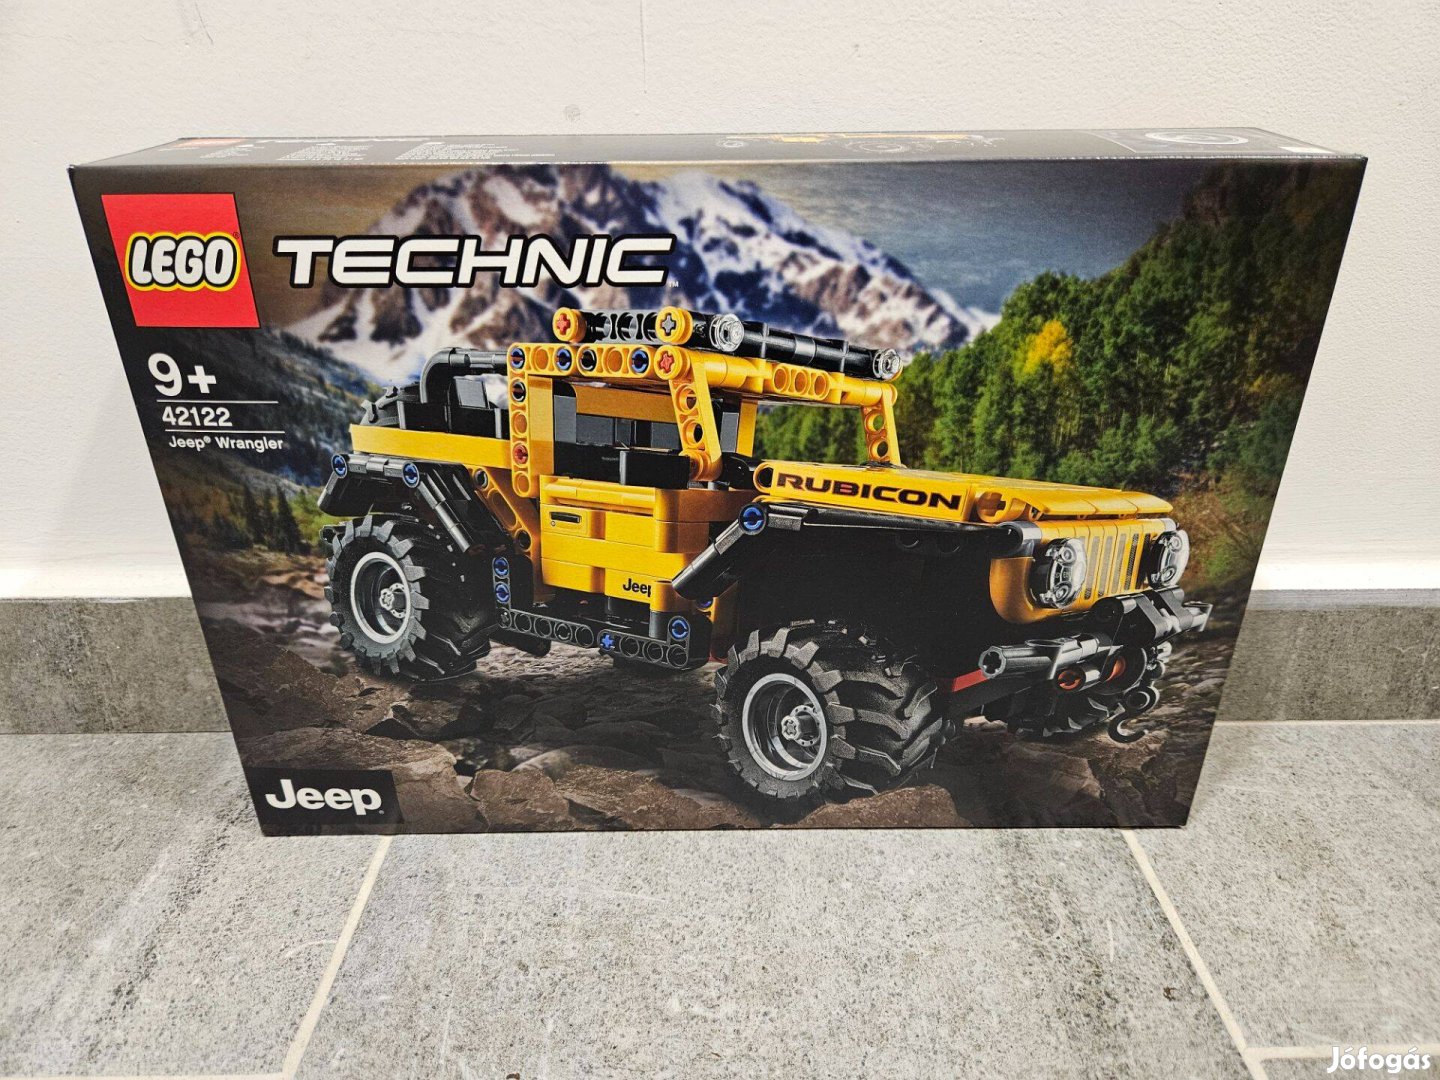 LEGO Technic - Jeep Wrangler 42122 bontatlan, új